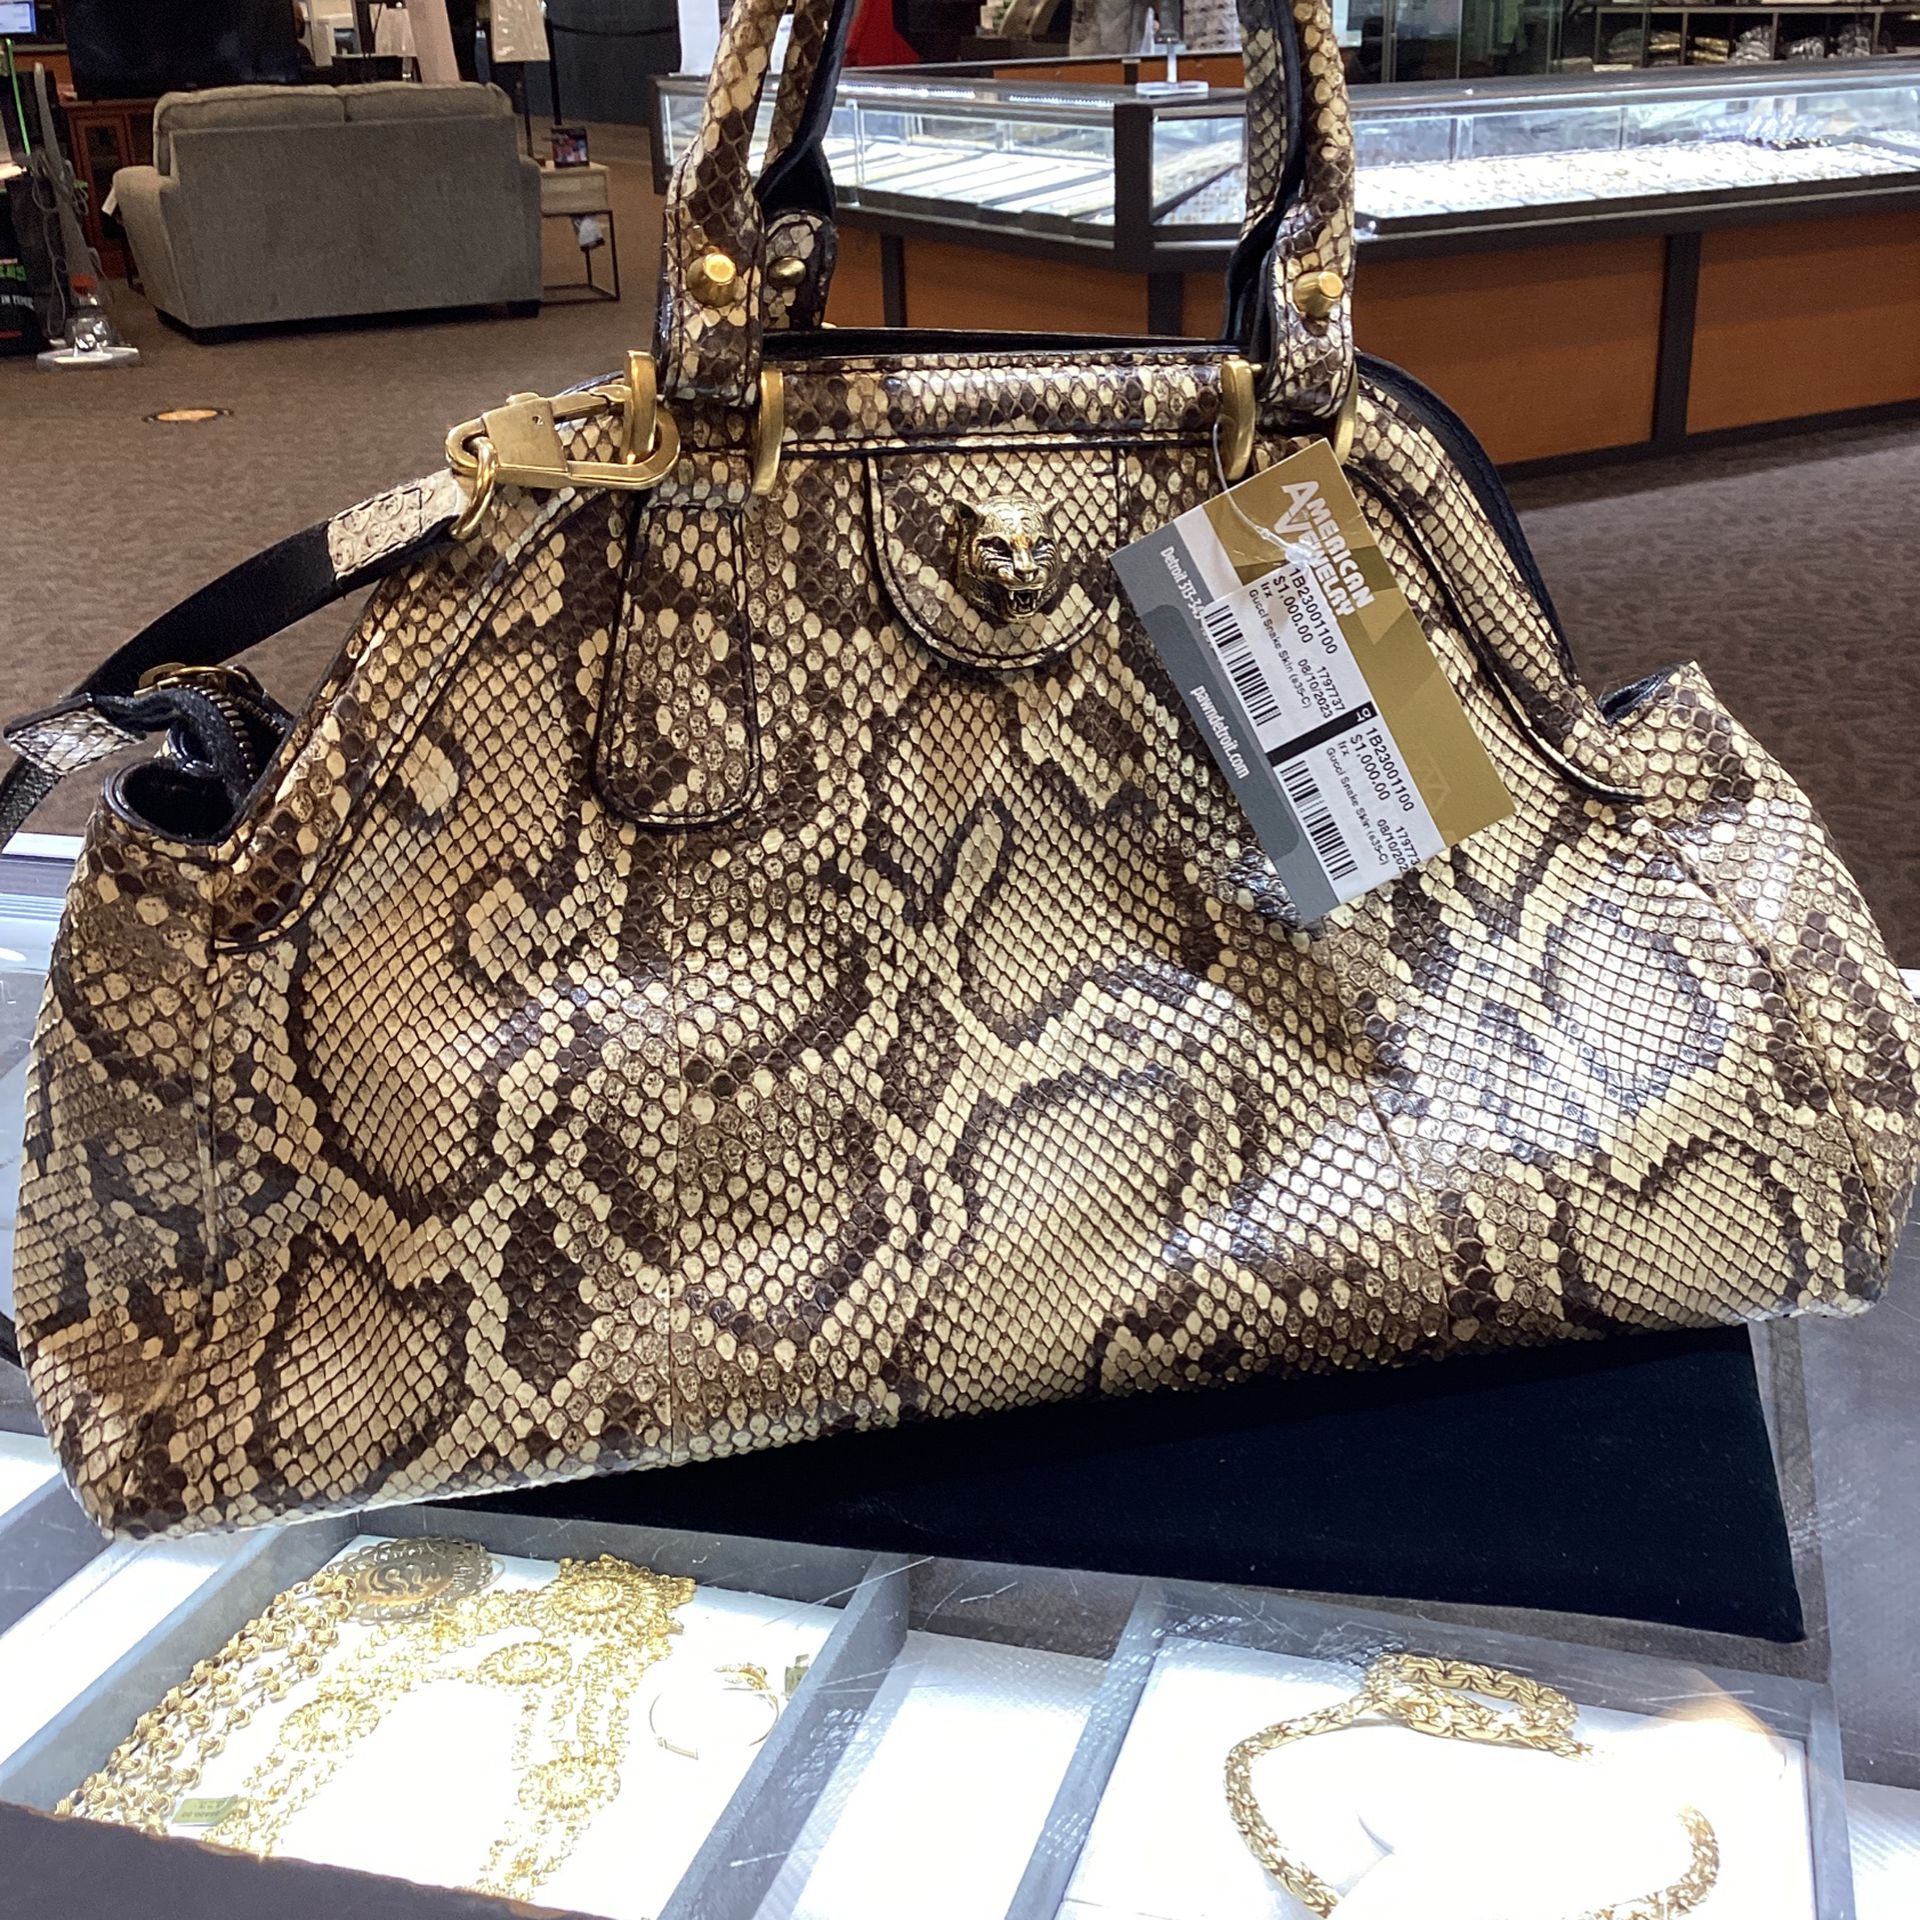 Gucci Snakeskin Bag for Sale in Detroit, MI - OfferUp